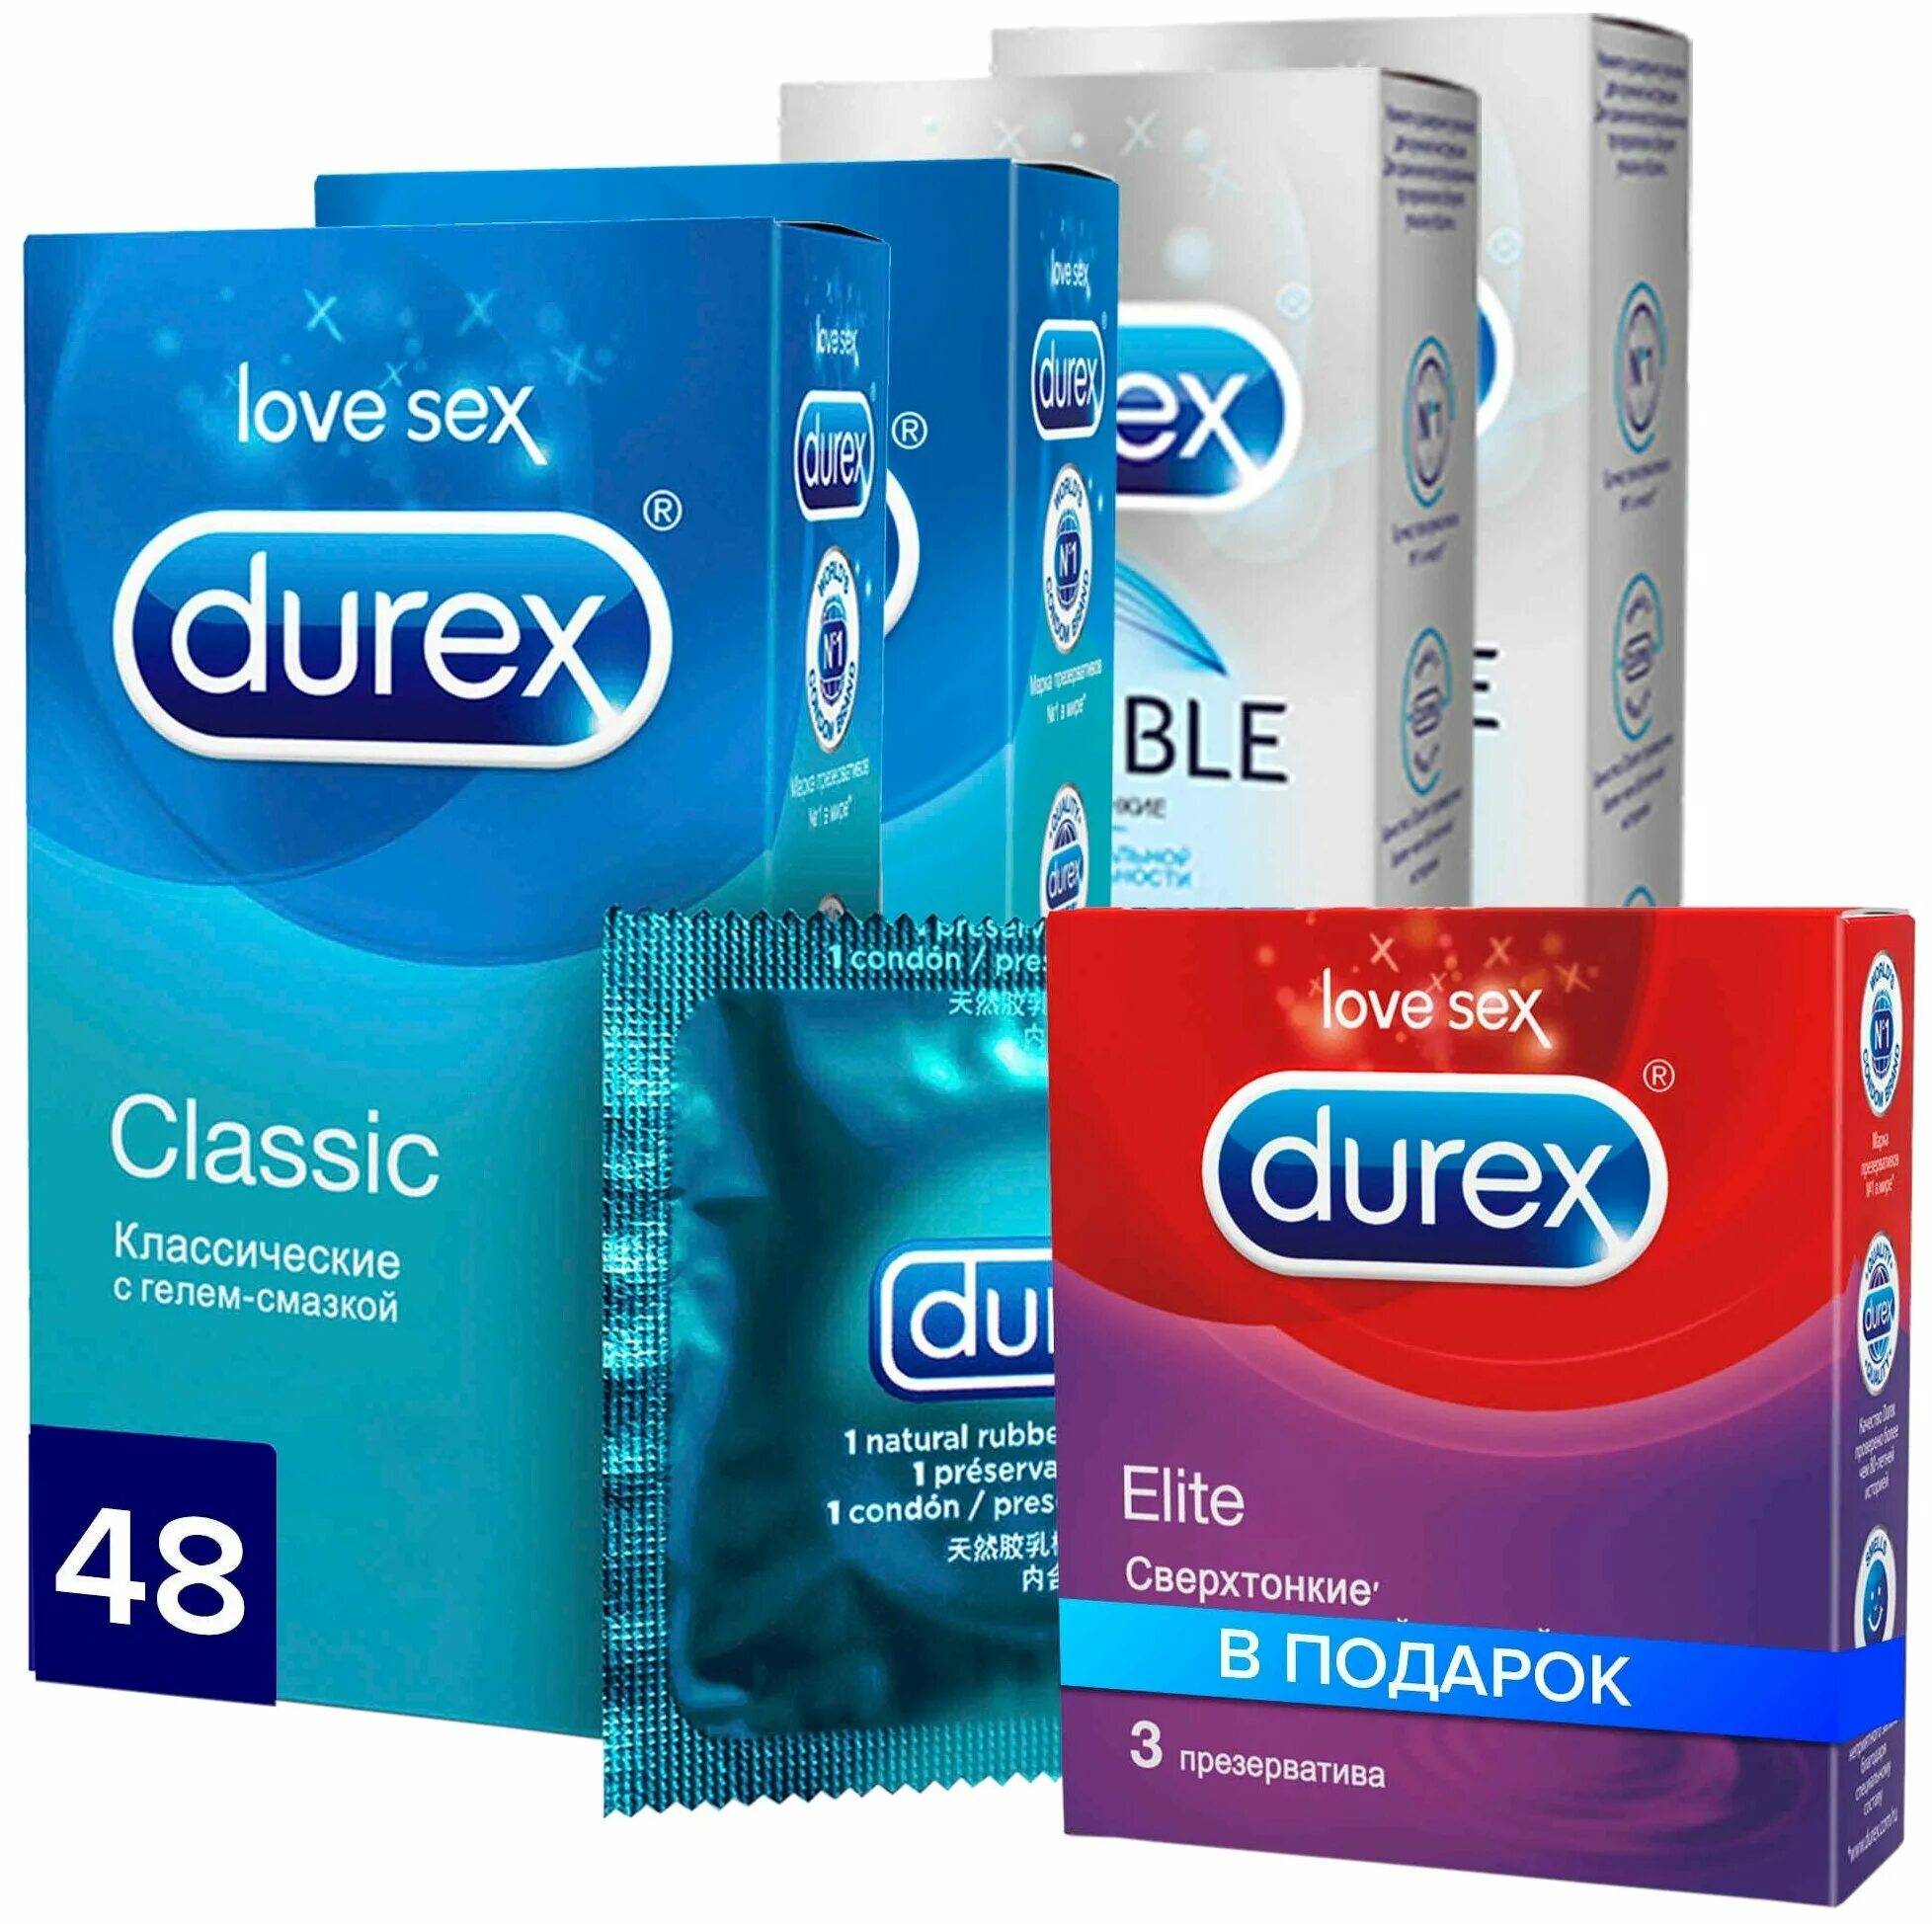 Презервативы Durex Classic 12 шт. Durex Classic презервативы классические 3шт. Дюрекс Классик 12 шт. Презервативы дюрекс классические 12 шт.